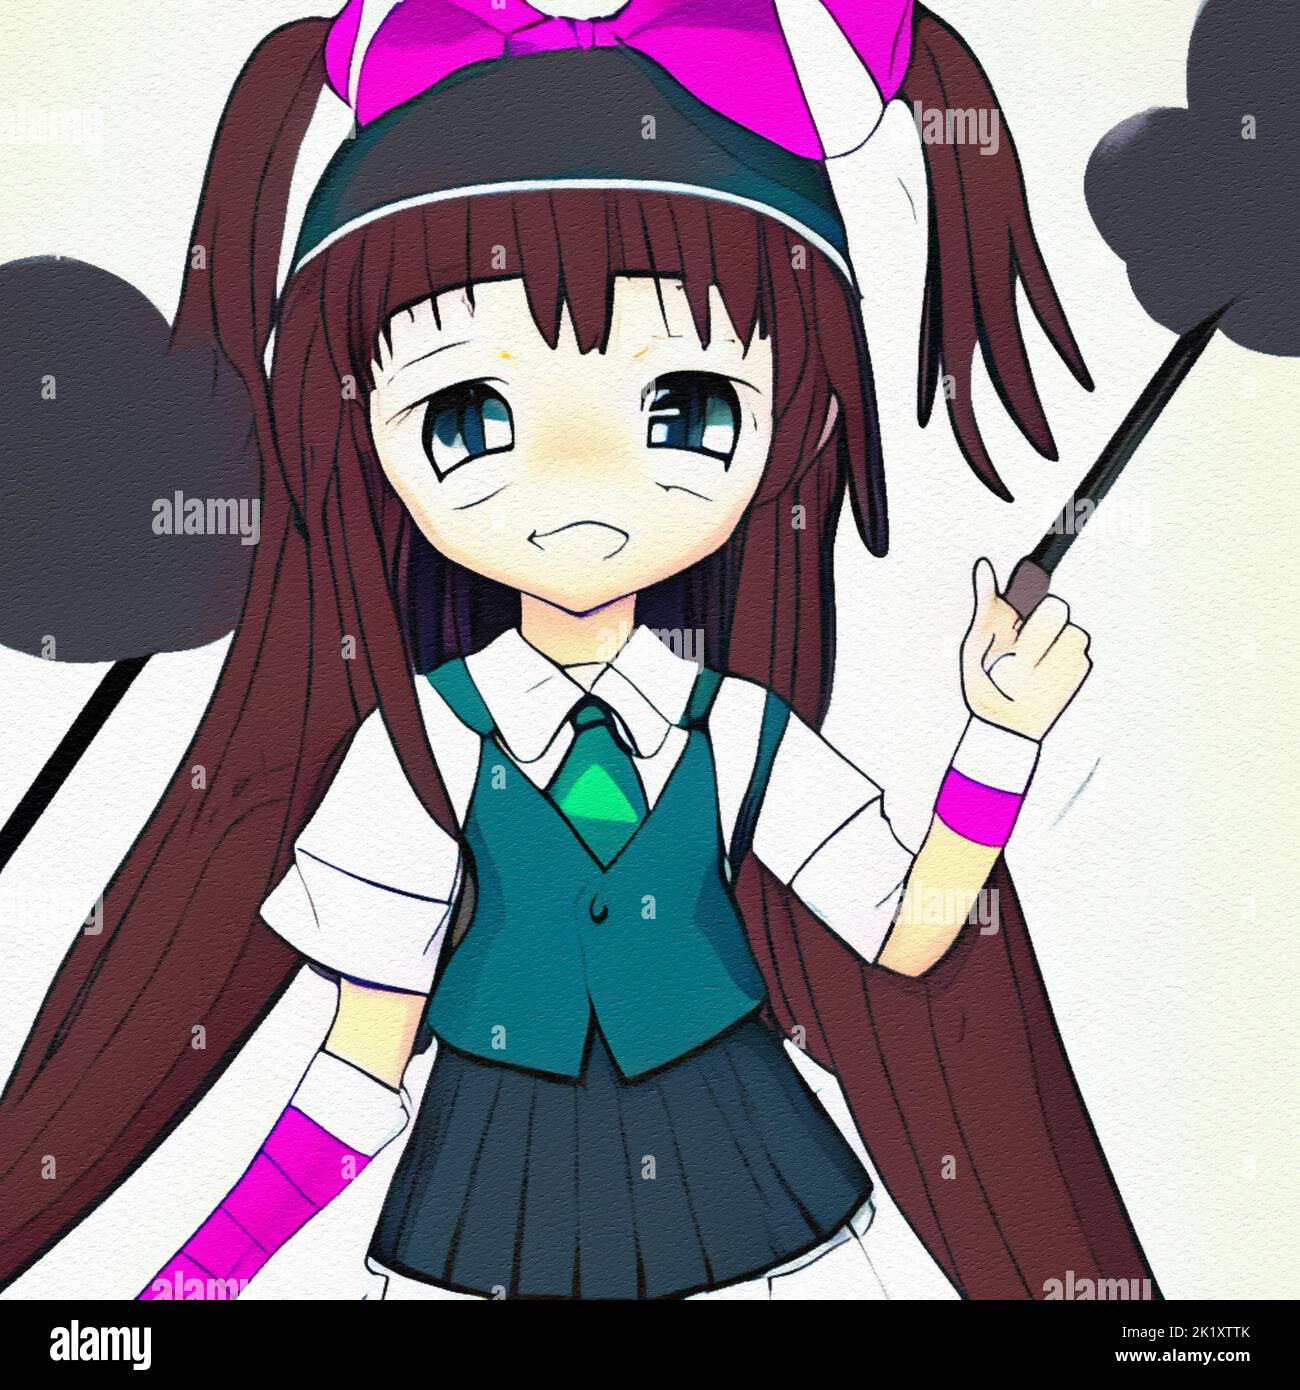 Anime Pretty Girl Dark Hair Anime Girl | Greeting Card